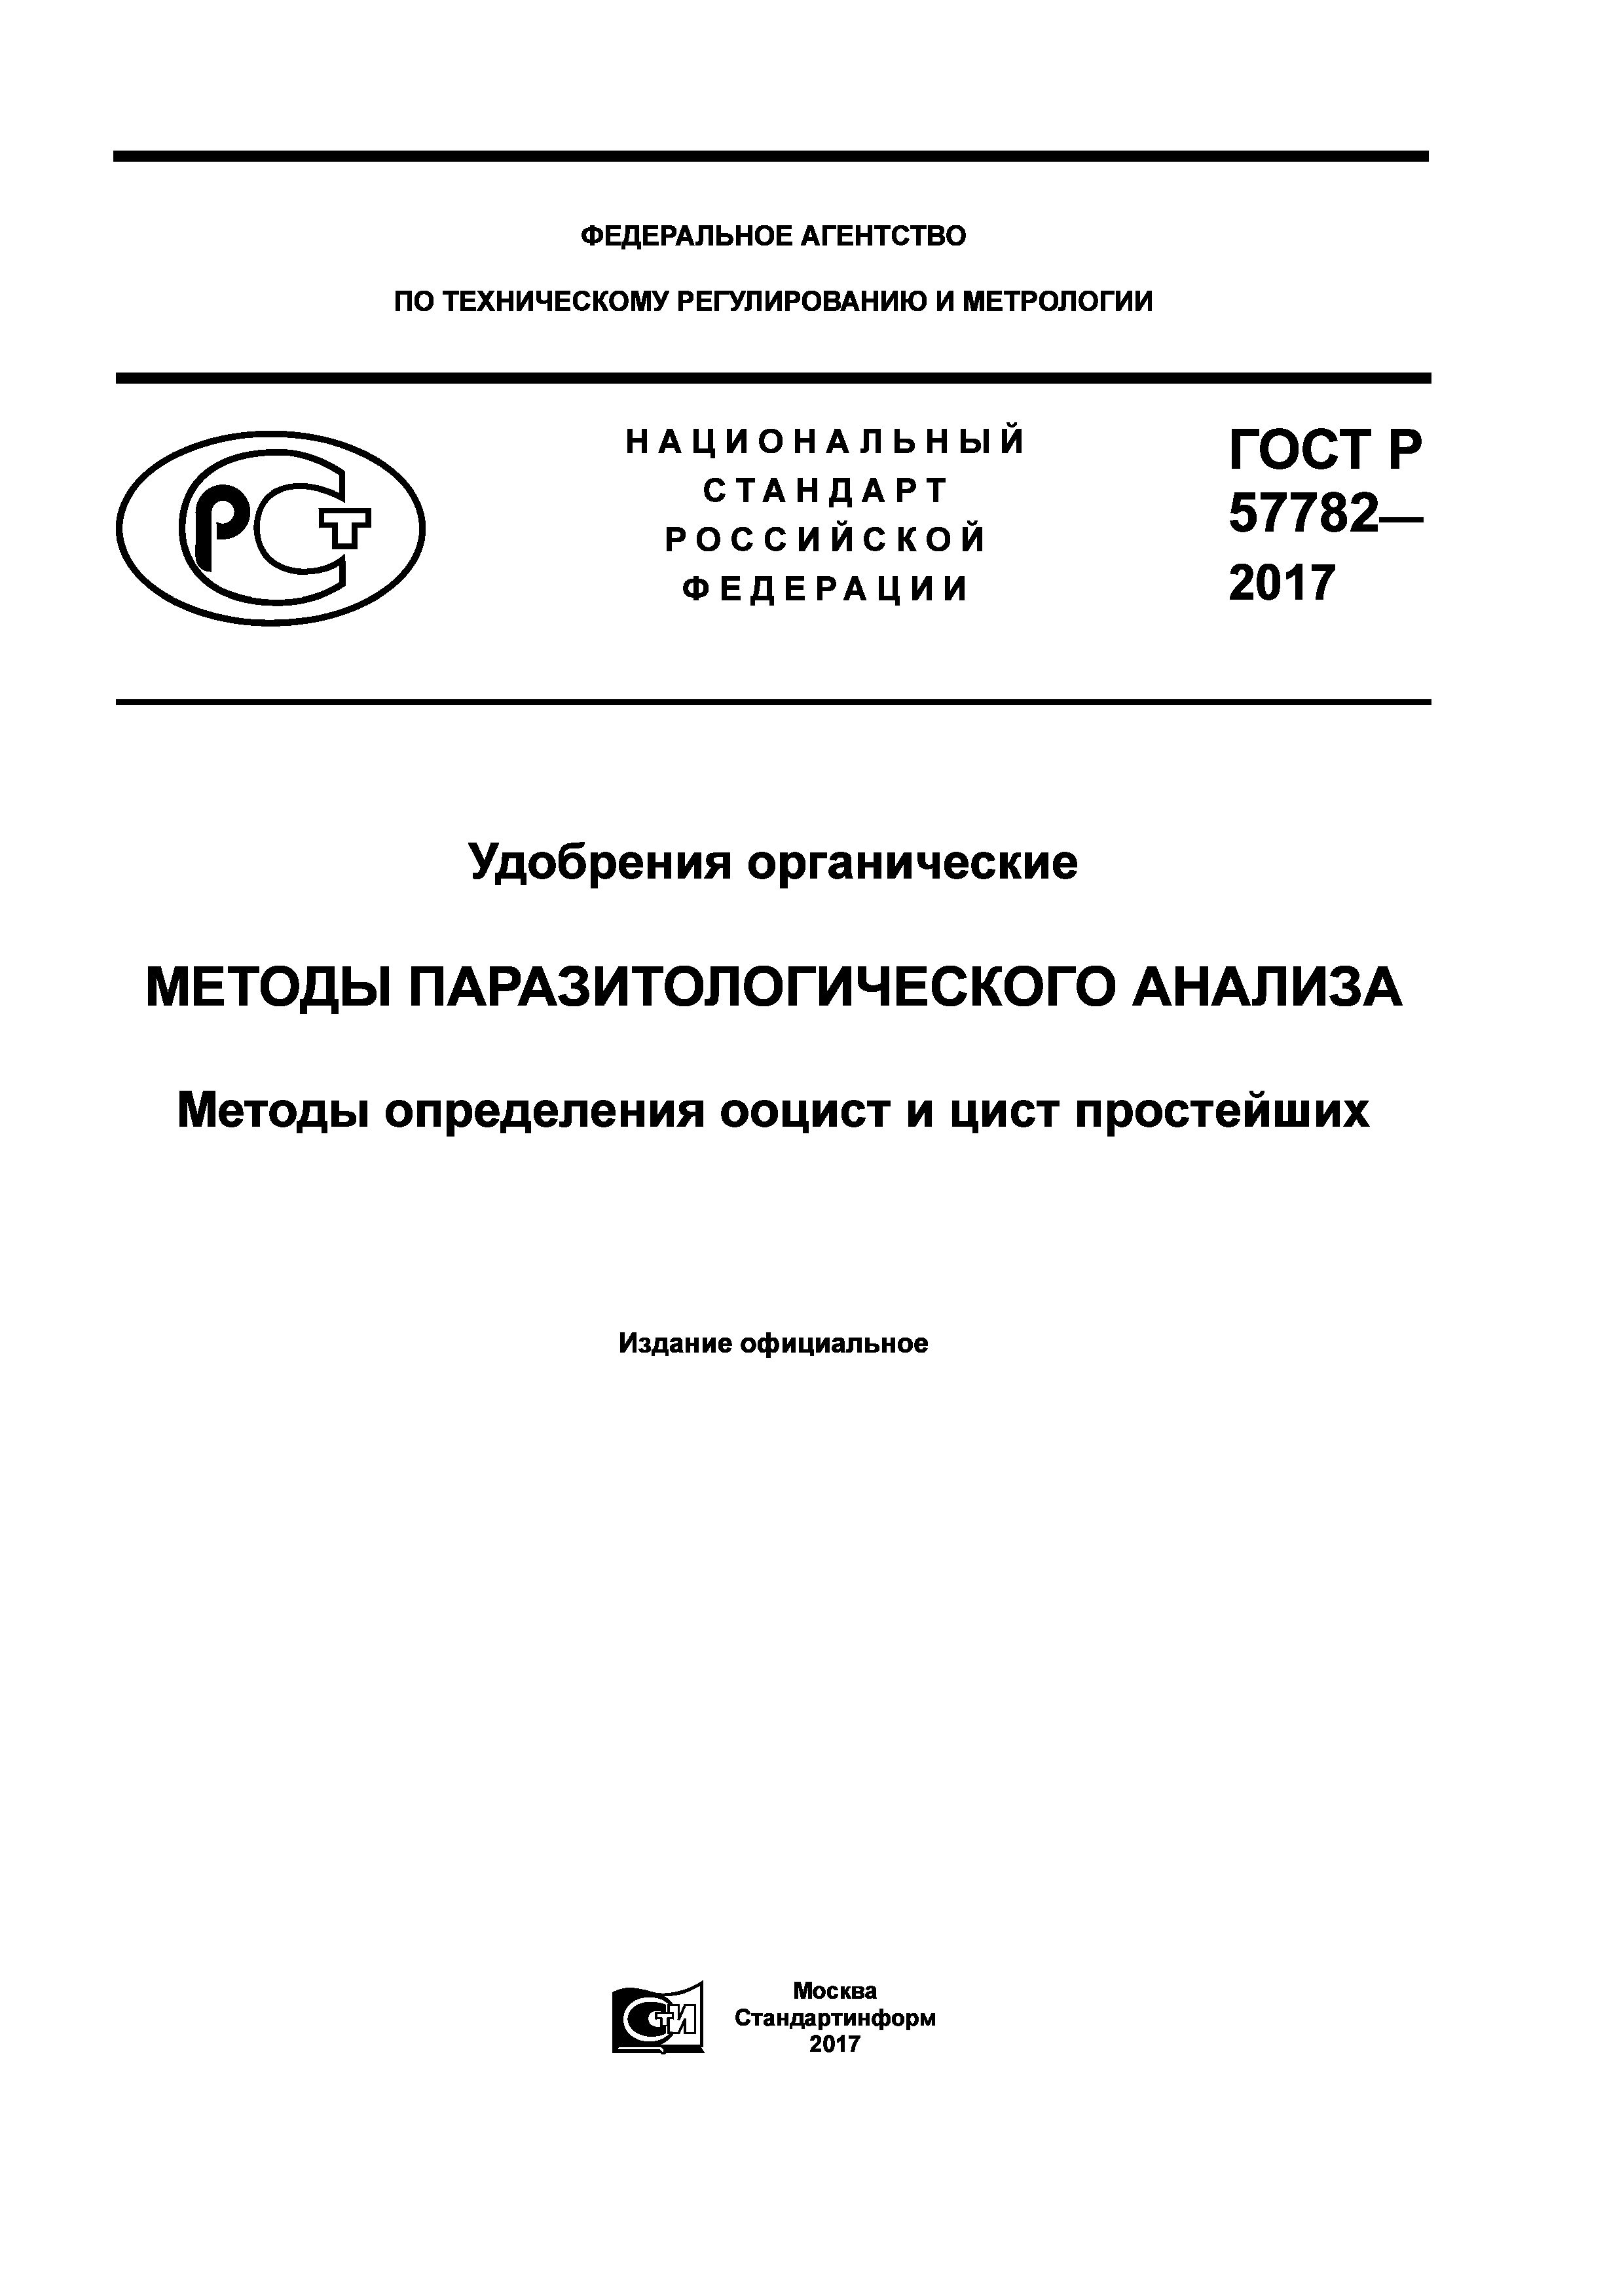 ГОСТ Р 57782-2017